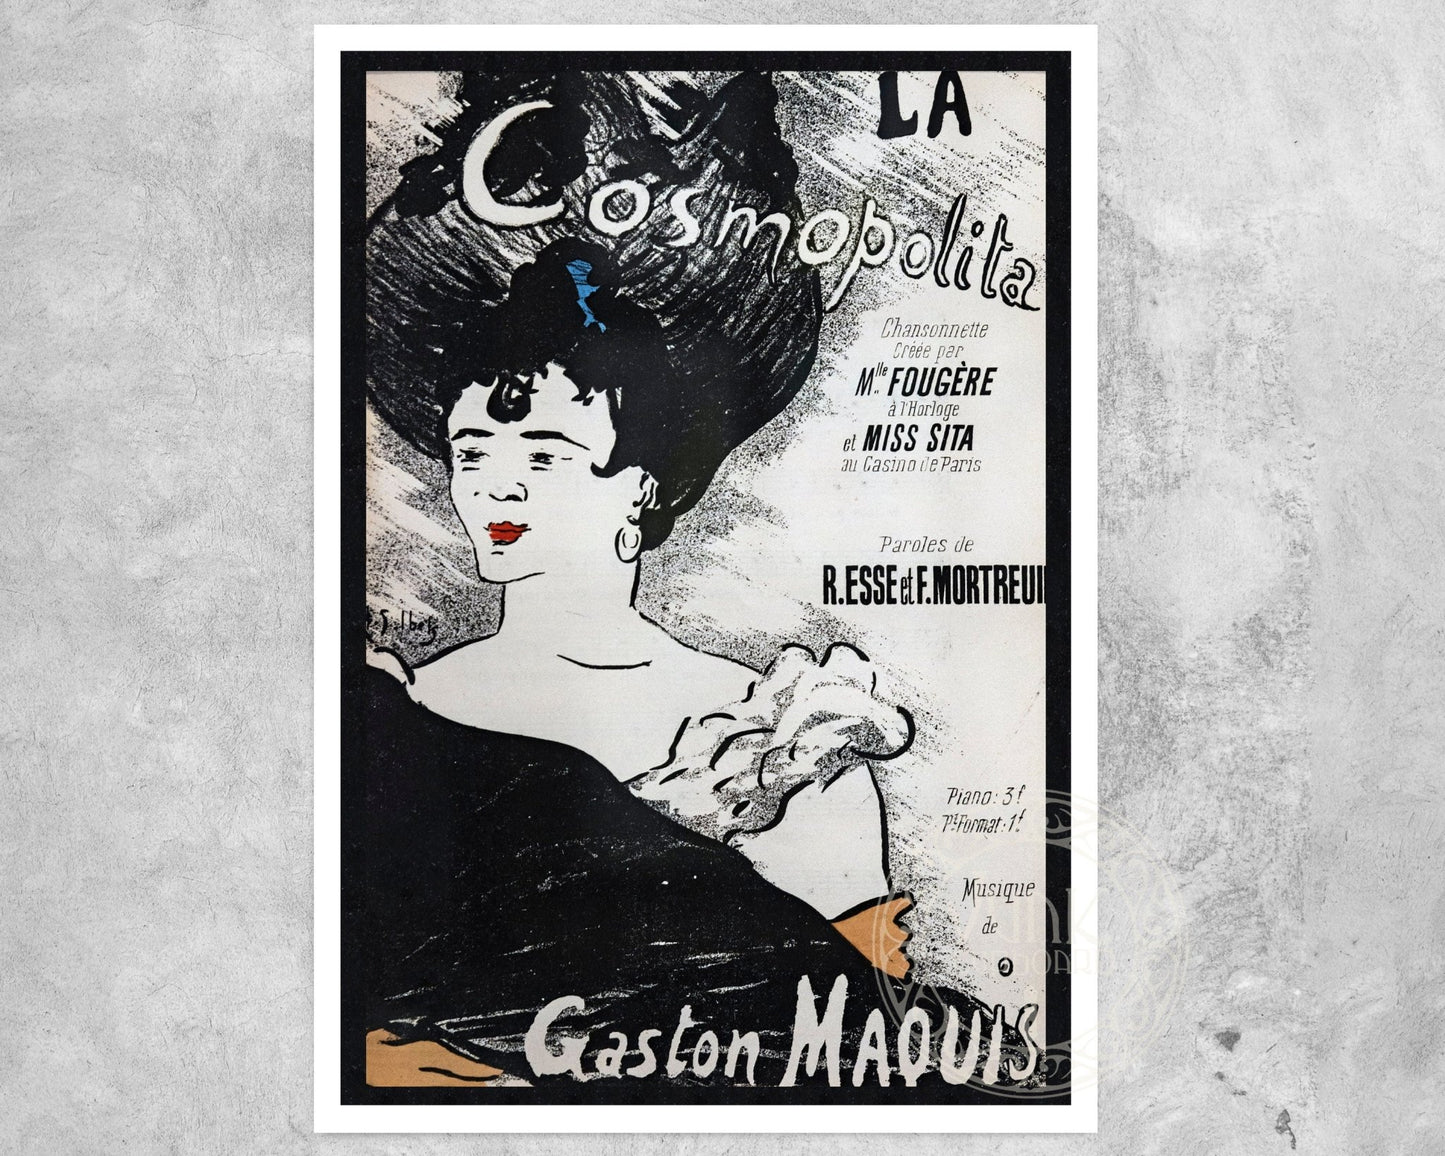 Henri - Gabriel Ibels "La Cosmopolita" (c.1894) Vintage Sheet Music Cover - Mabon Gallery